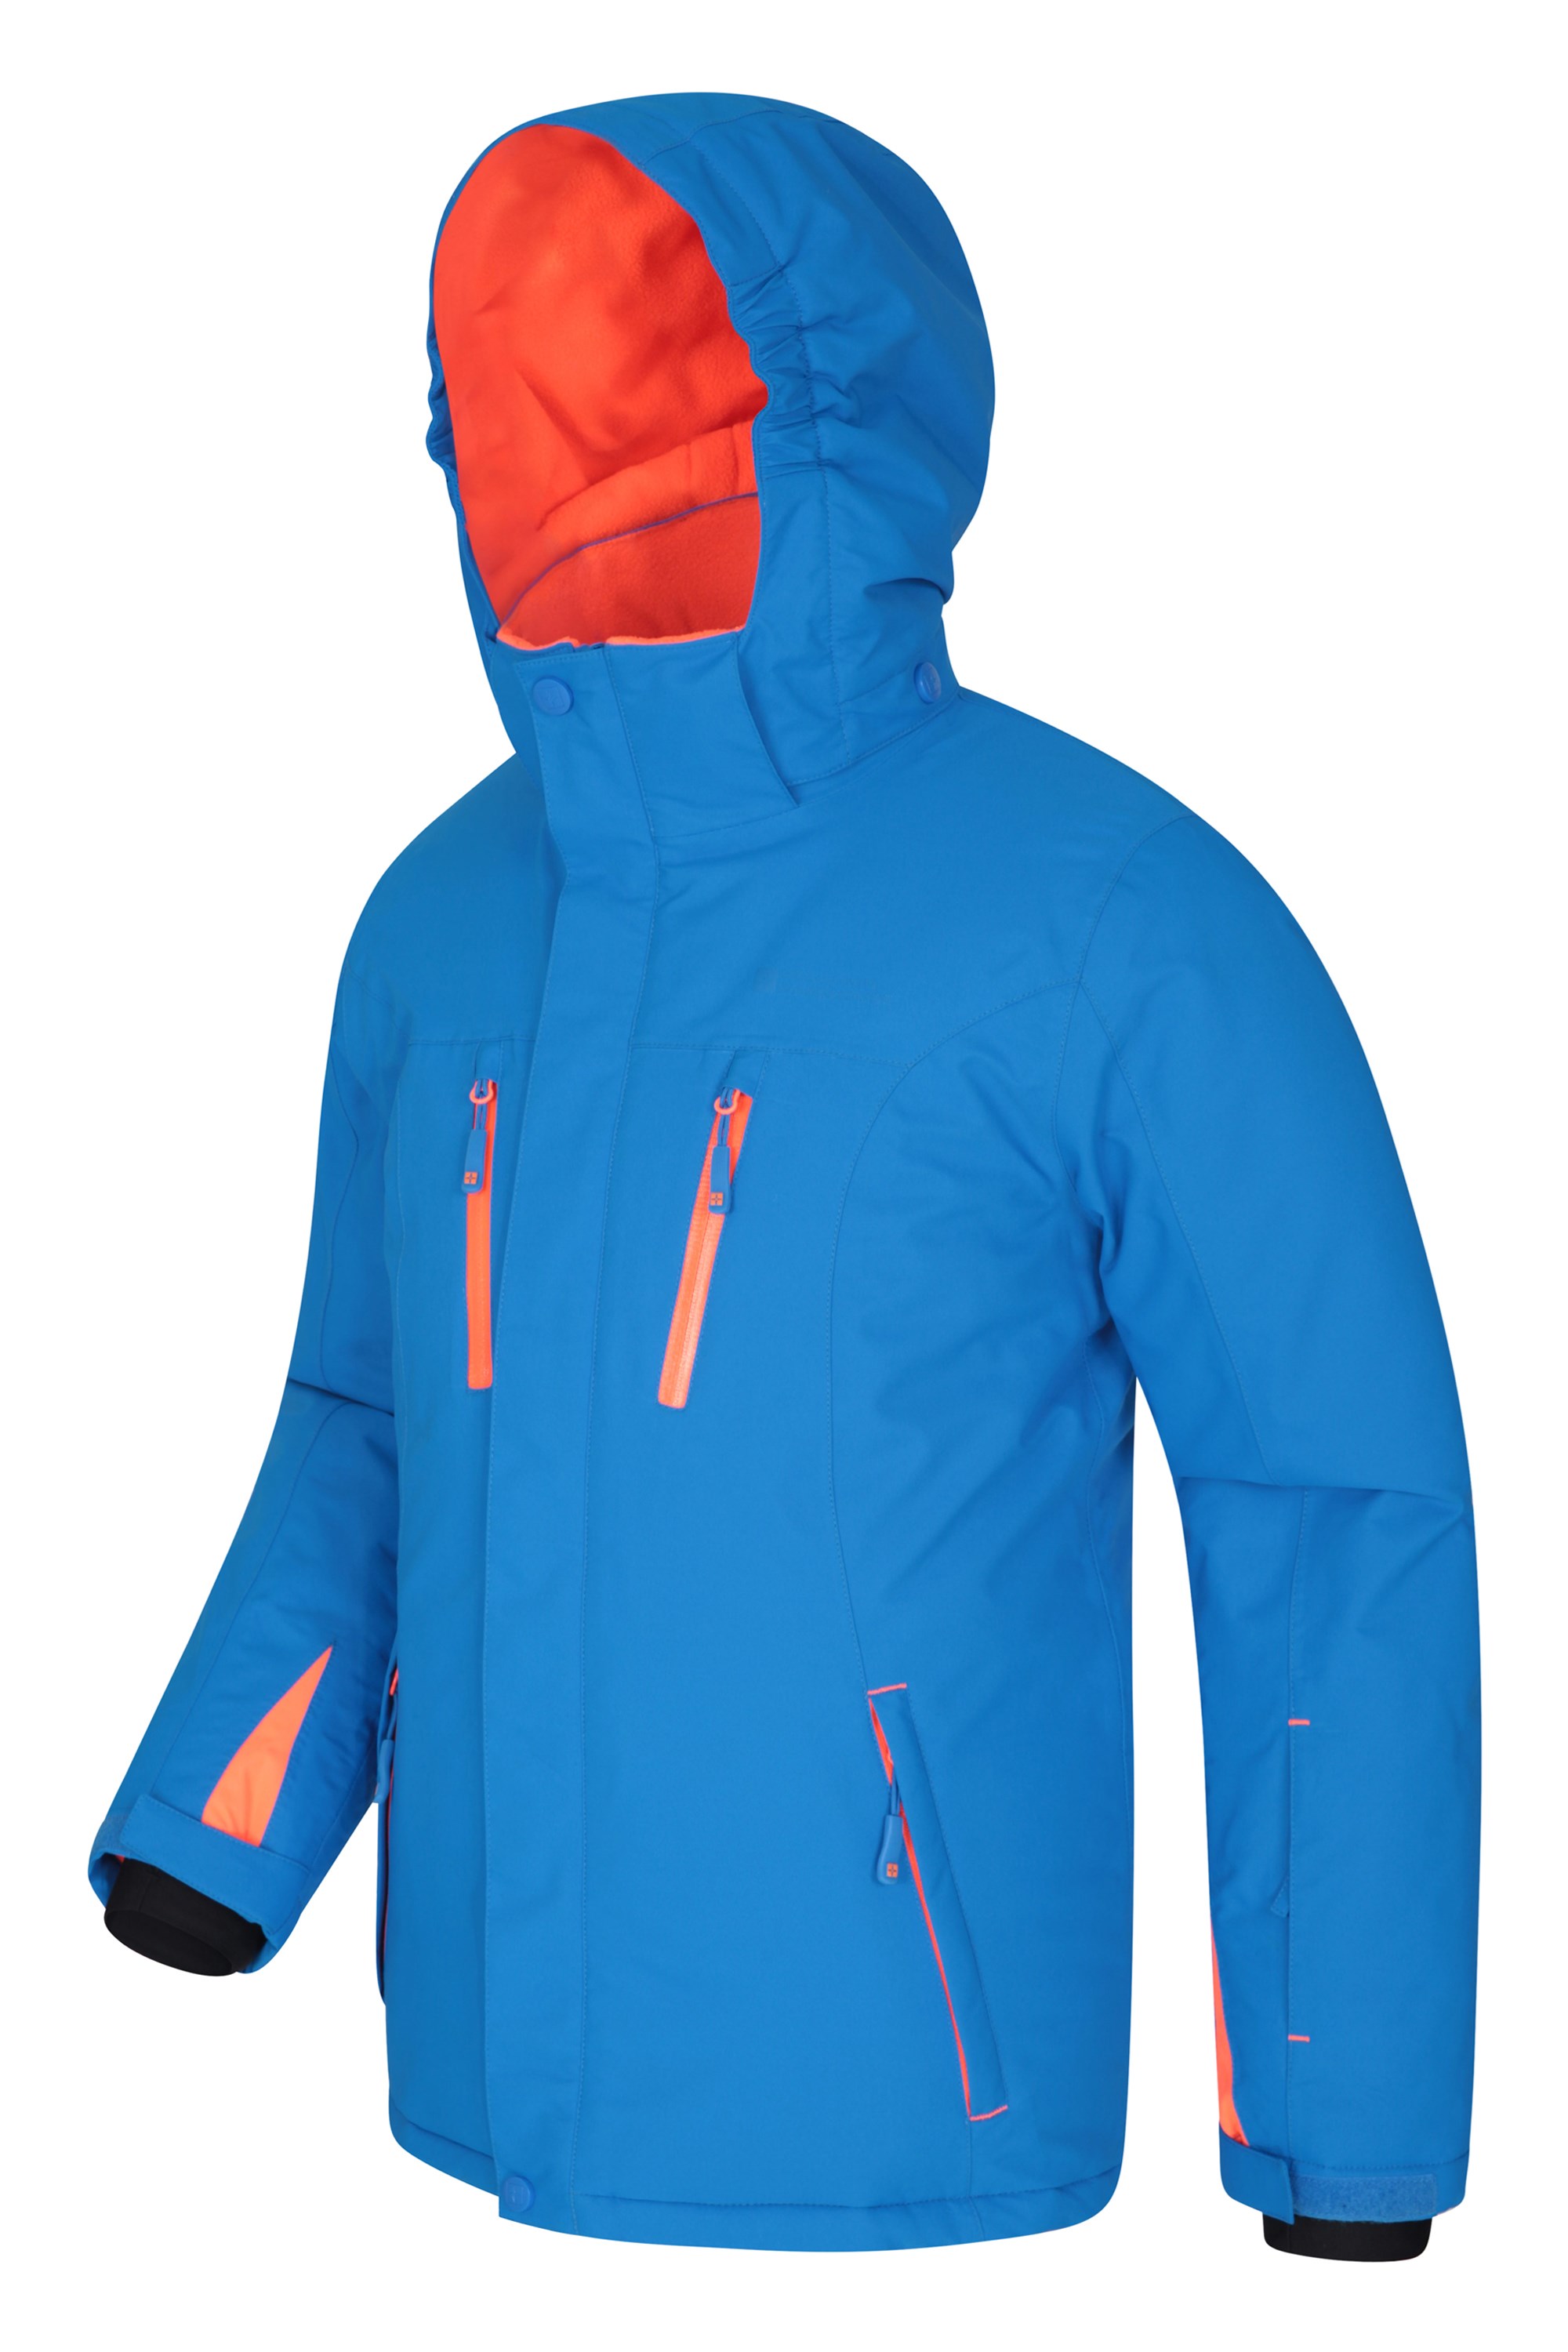 Mountain Warehouse Galactic Kids Winter Waterproof Ski Jacket 